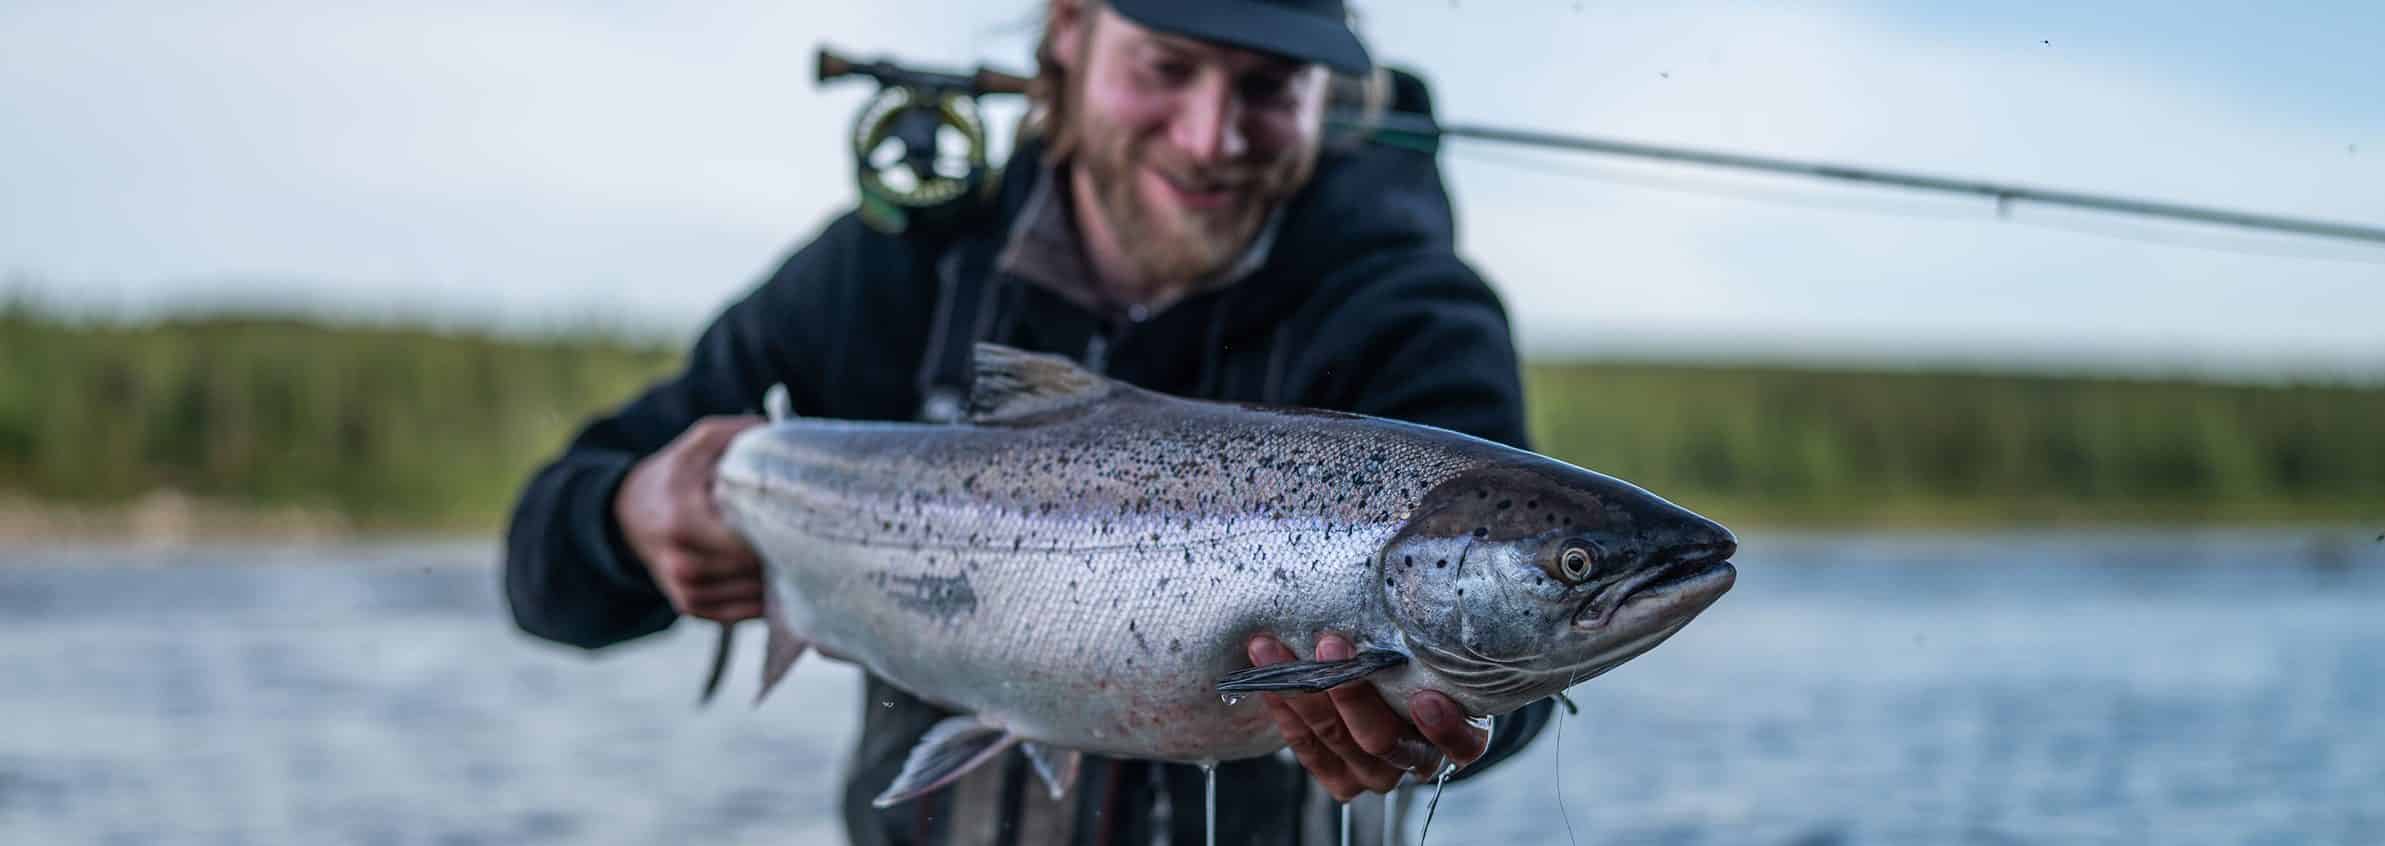 Fly Fishing Atlantic Salmon, Trophy Brook Trout Nunavik, Canada